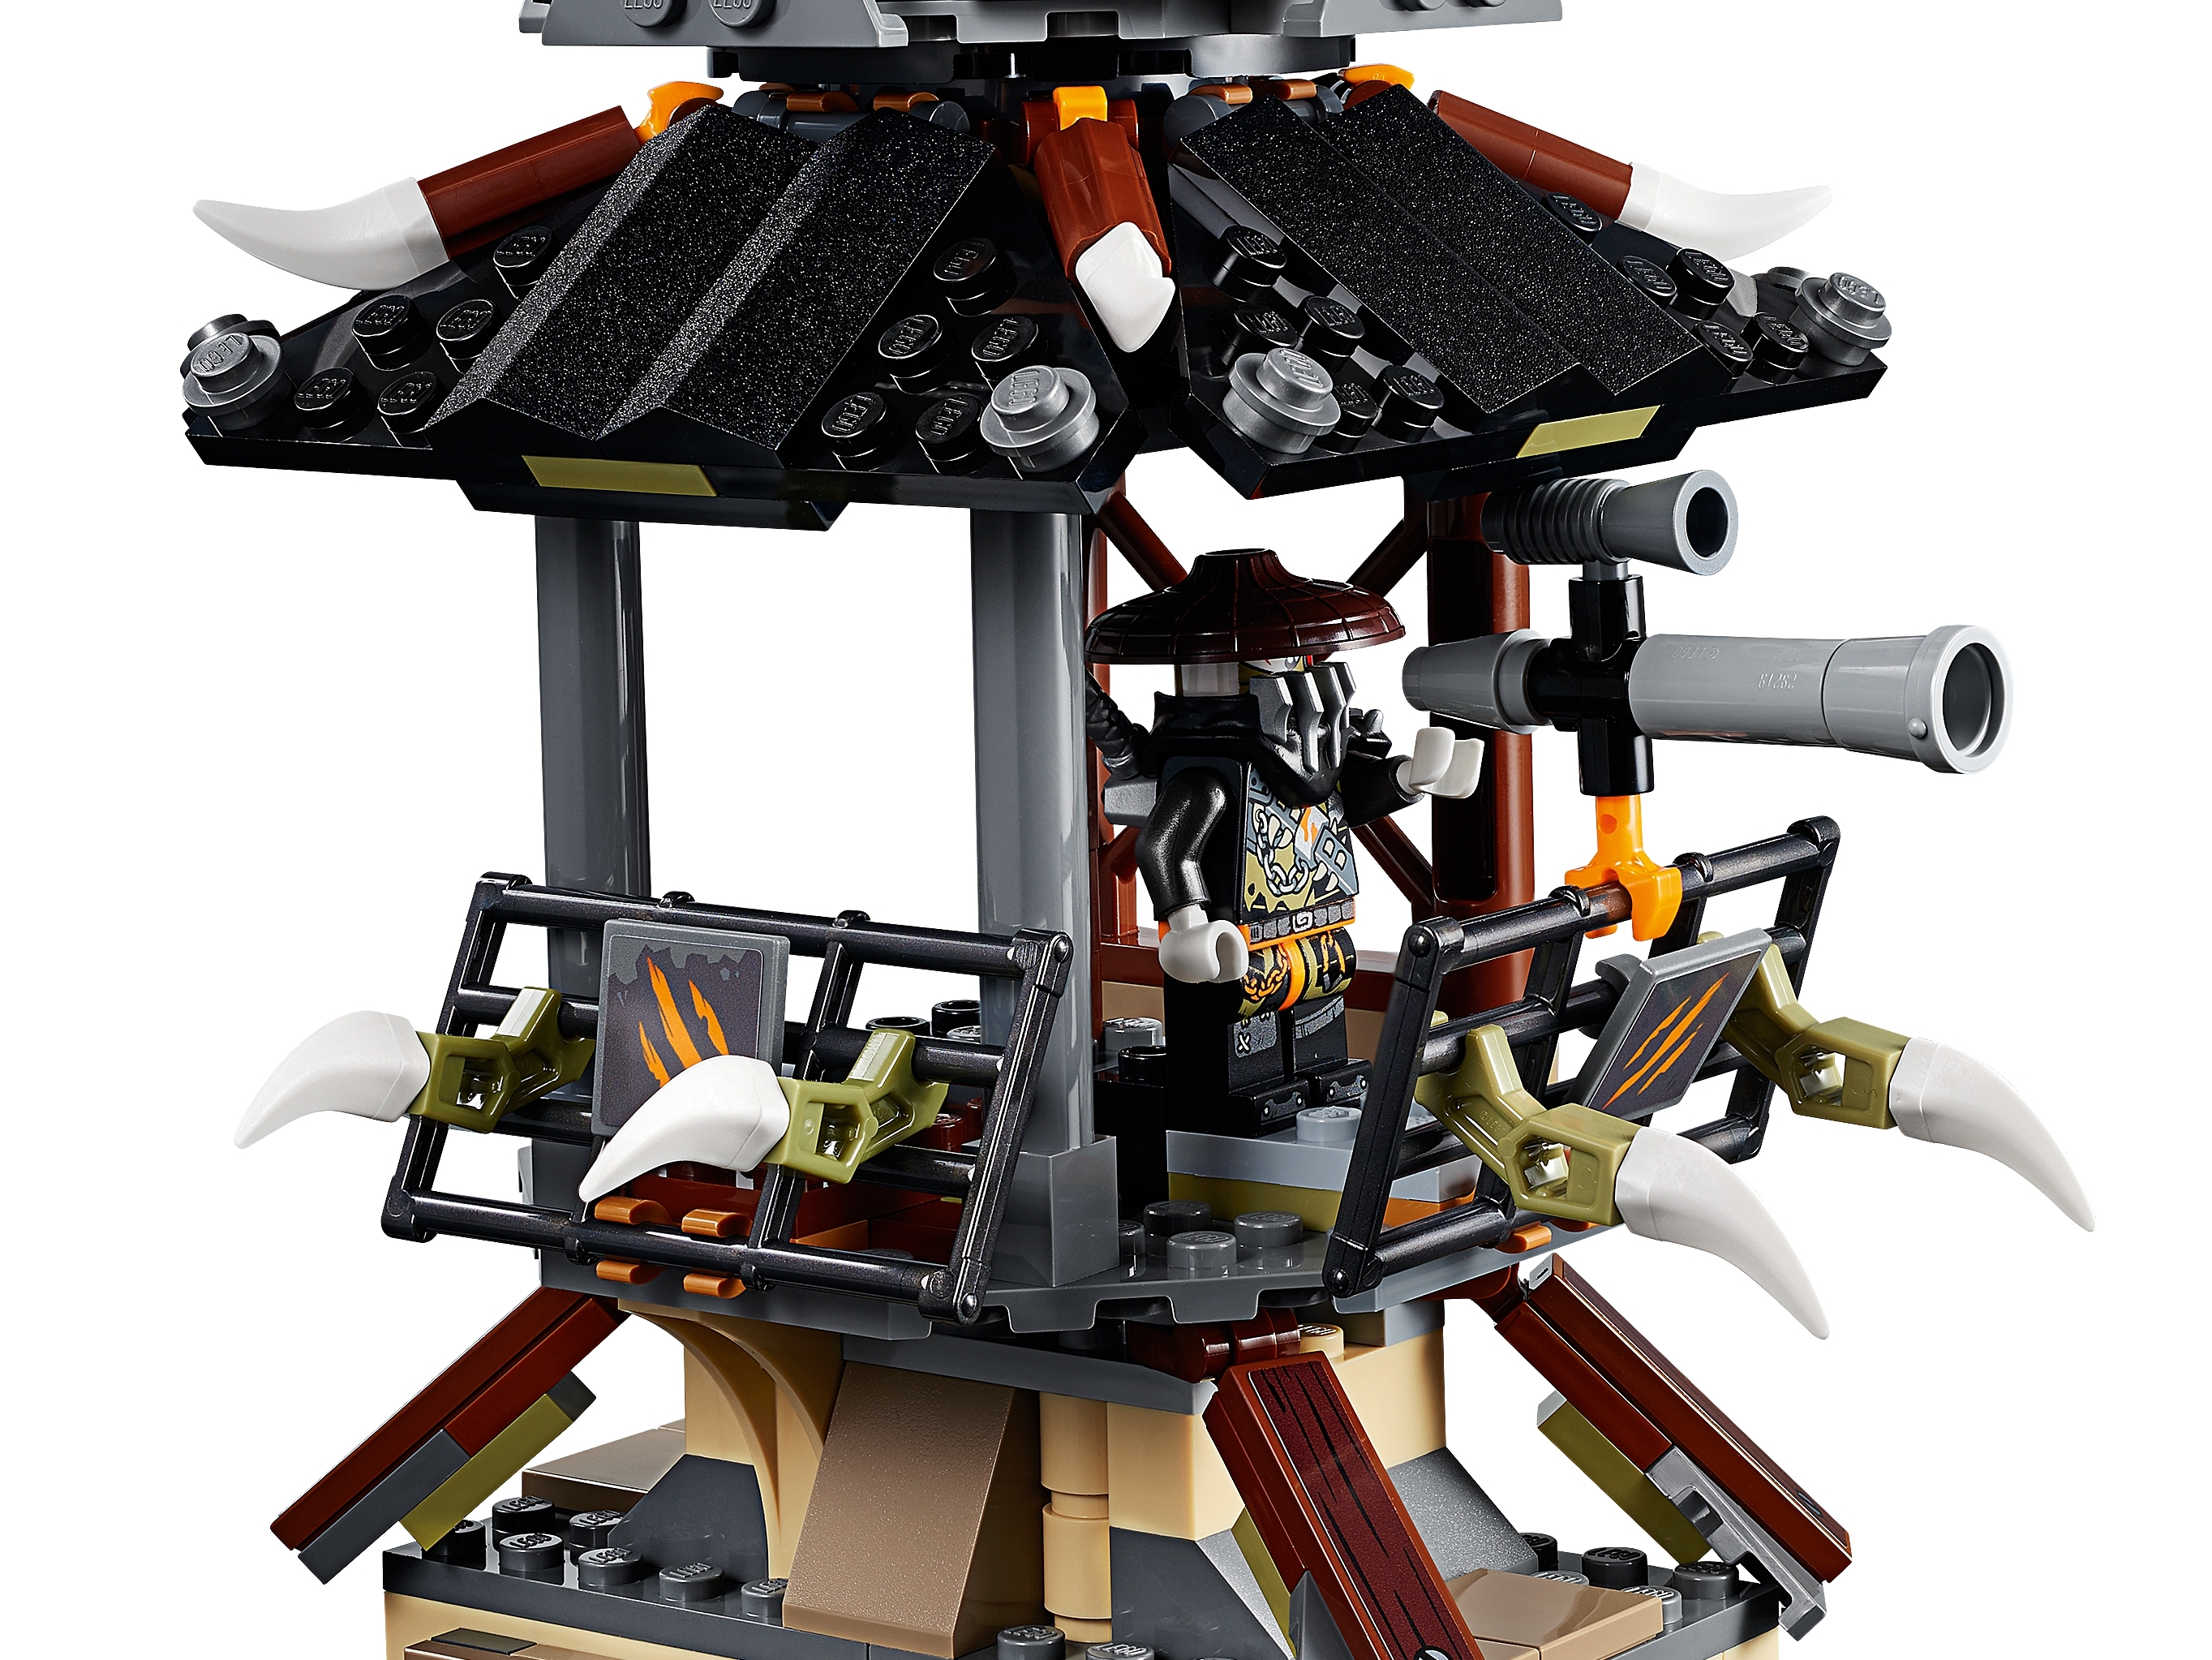 Dragon Pit 70655 | NINJAGO® | Buy online at the Official LEGO® Shop